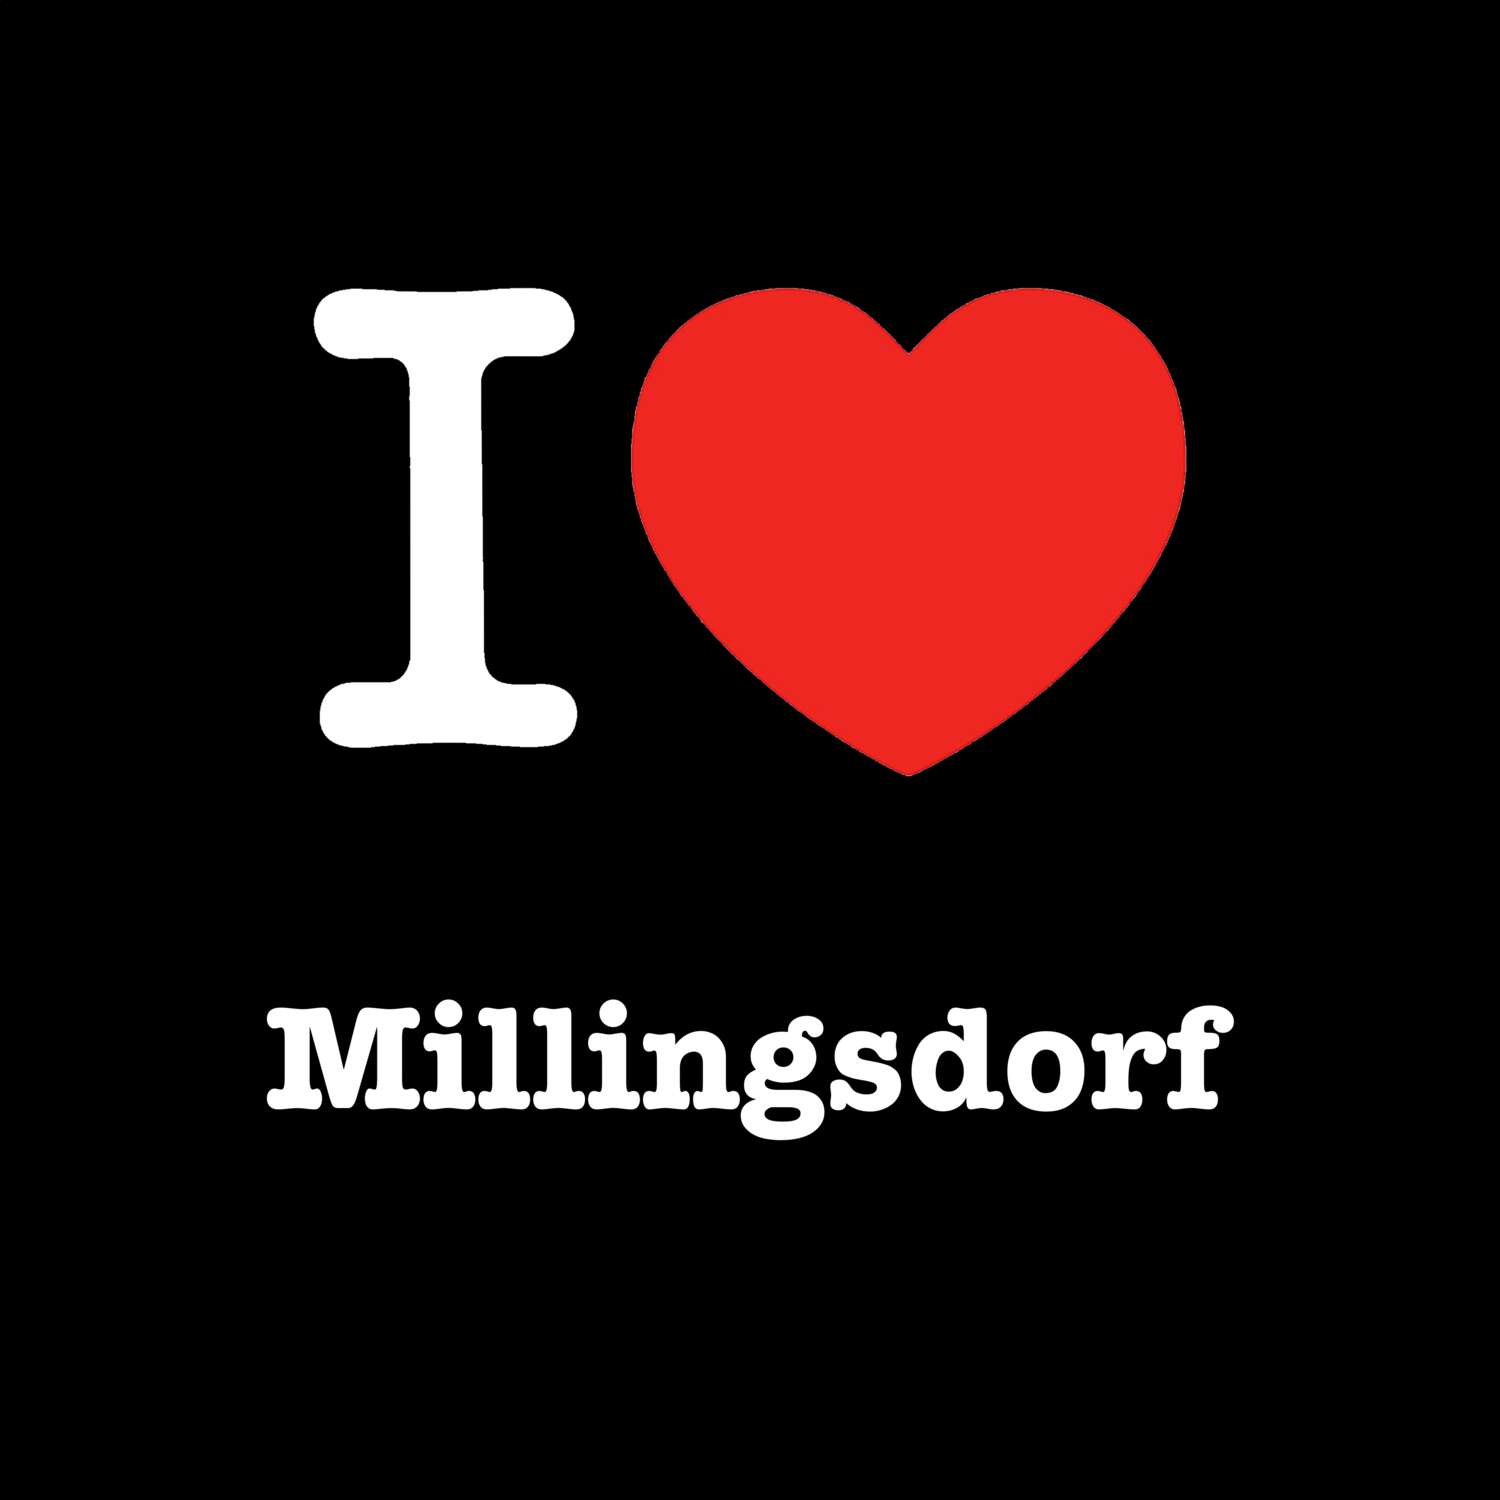 Millingsdorf T-Shirt »I love«